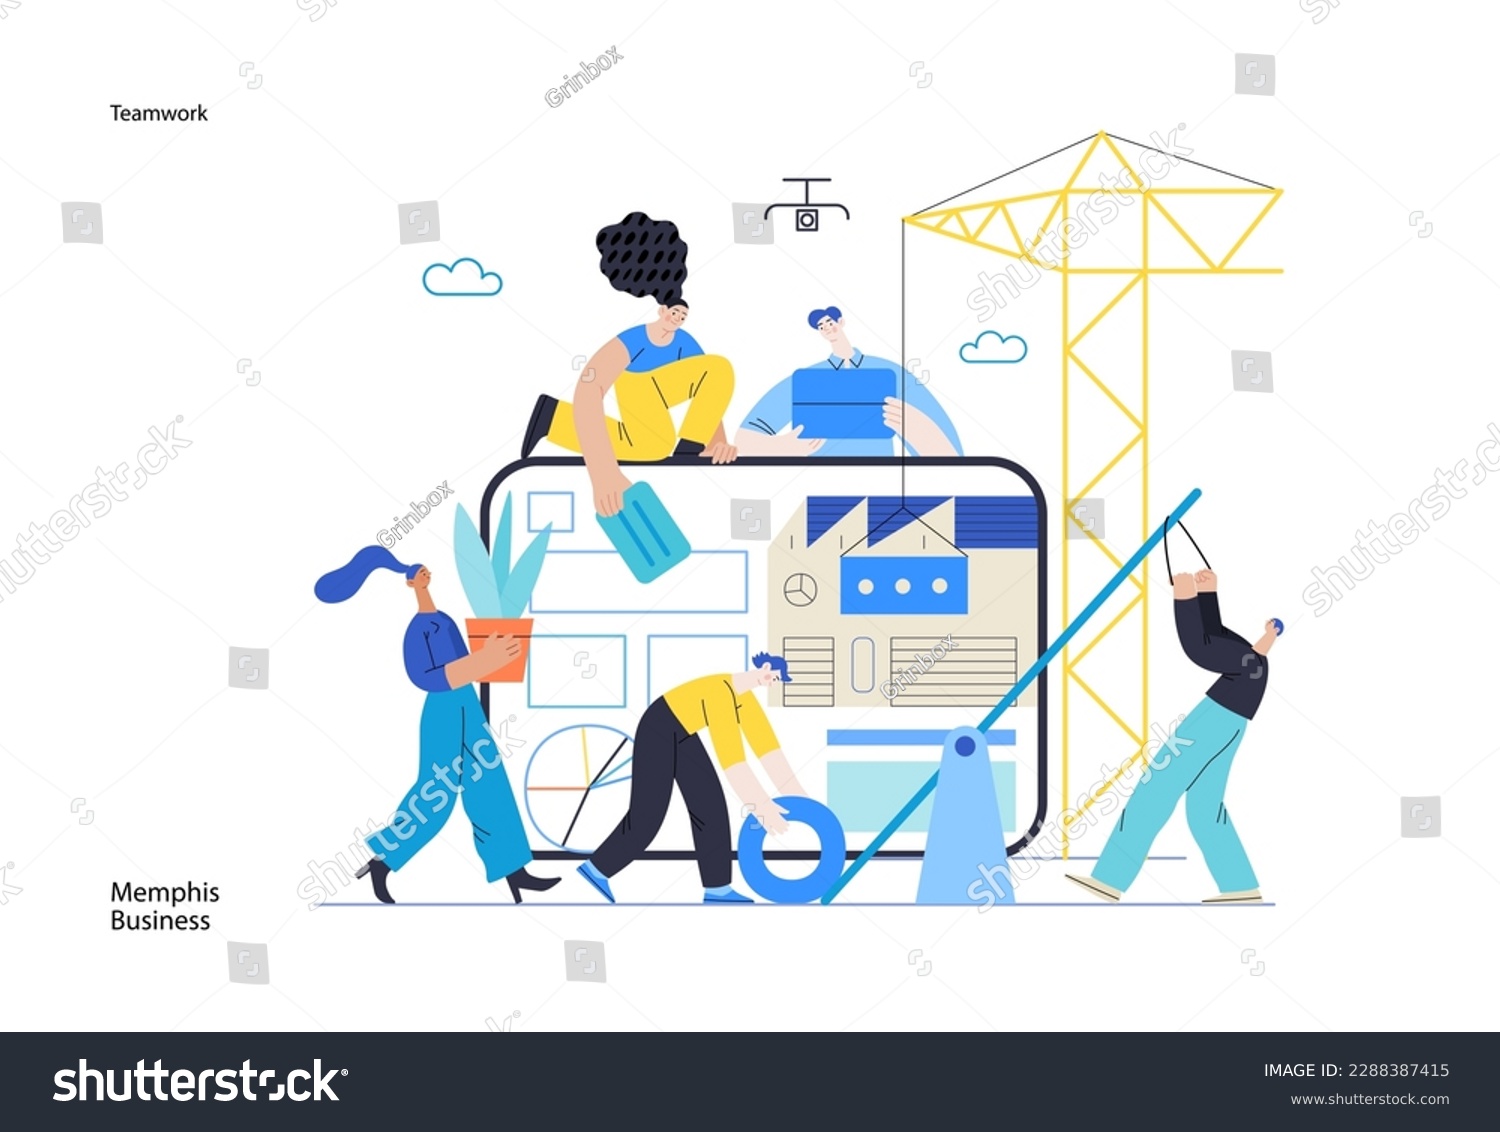 SVG of Memphis business illustration. Teamwork -modern flat vector concept illustration of people working together, building a company website, collaboration concept. Commerce business sales metaphor. svg